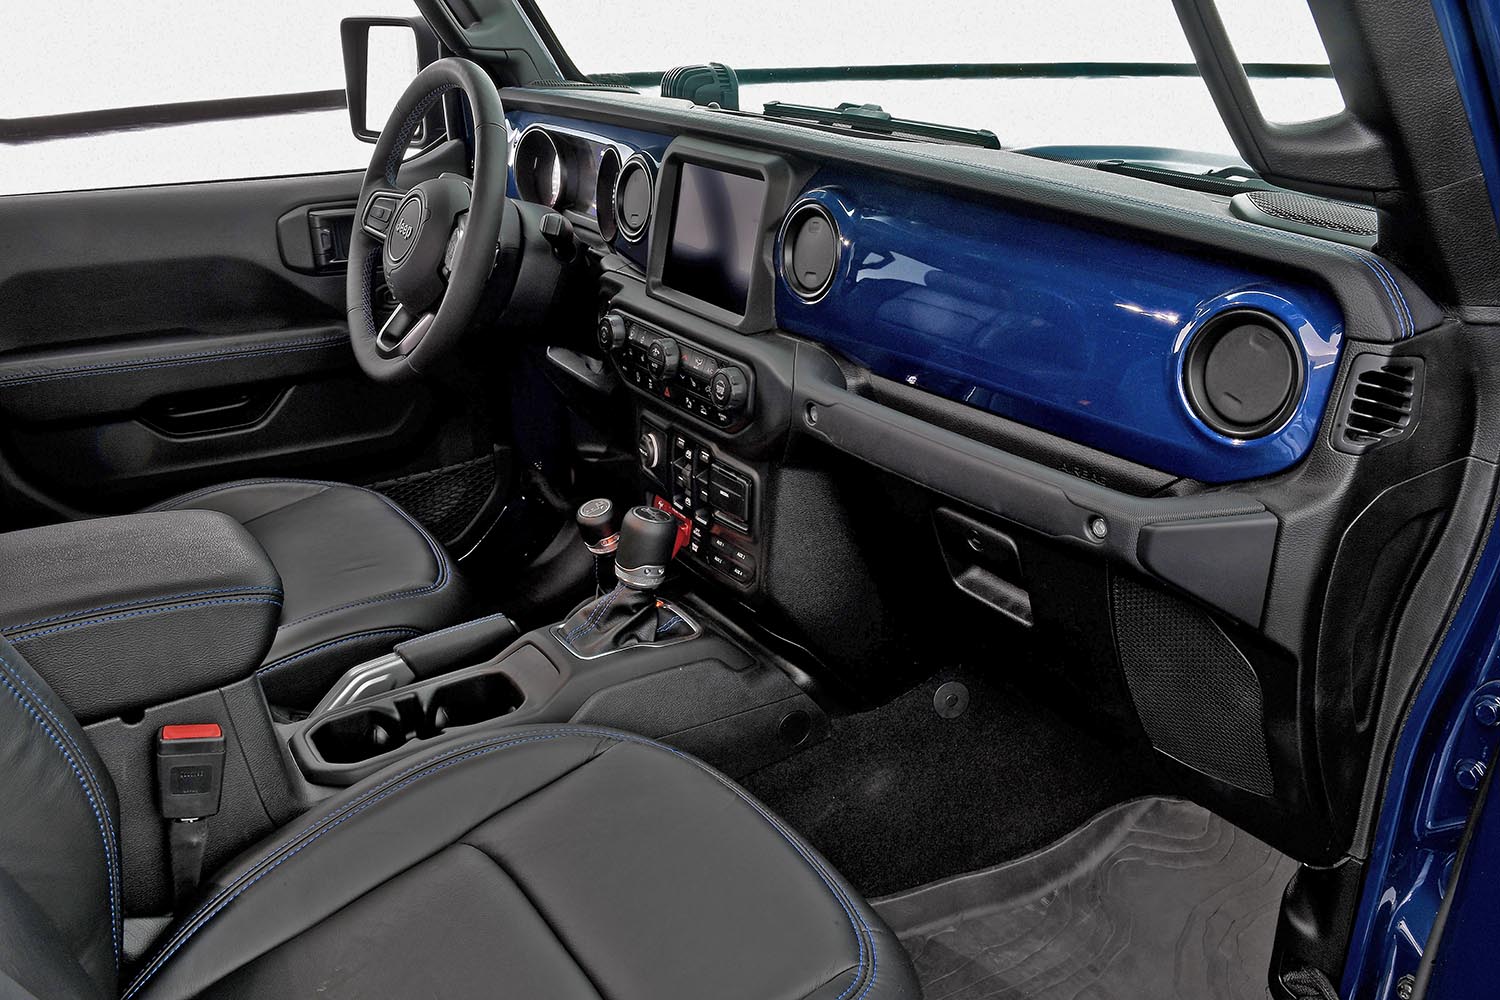 Jeep Gladiator Top Dog interior with black Katzkin leather seats with blue stitching